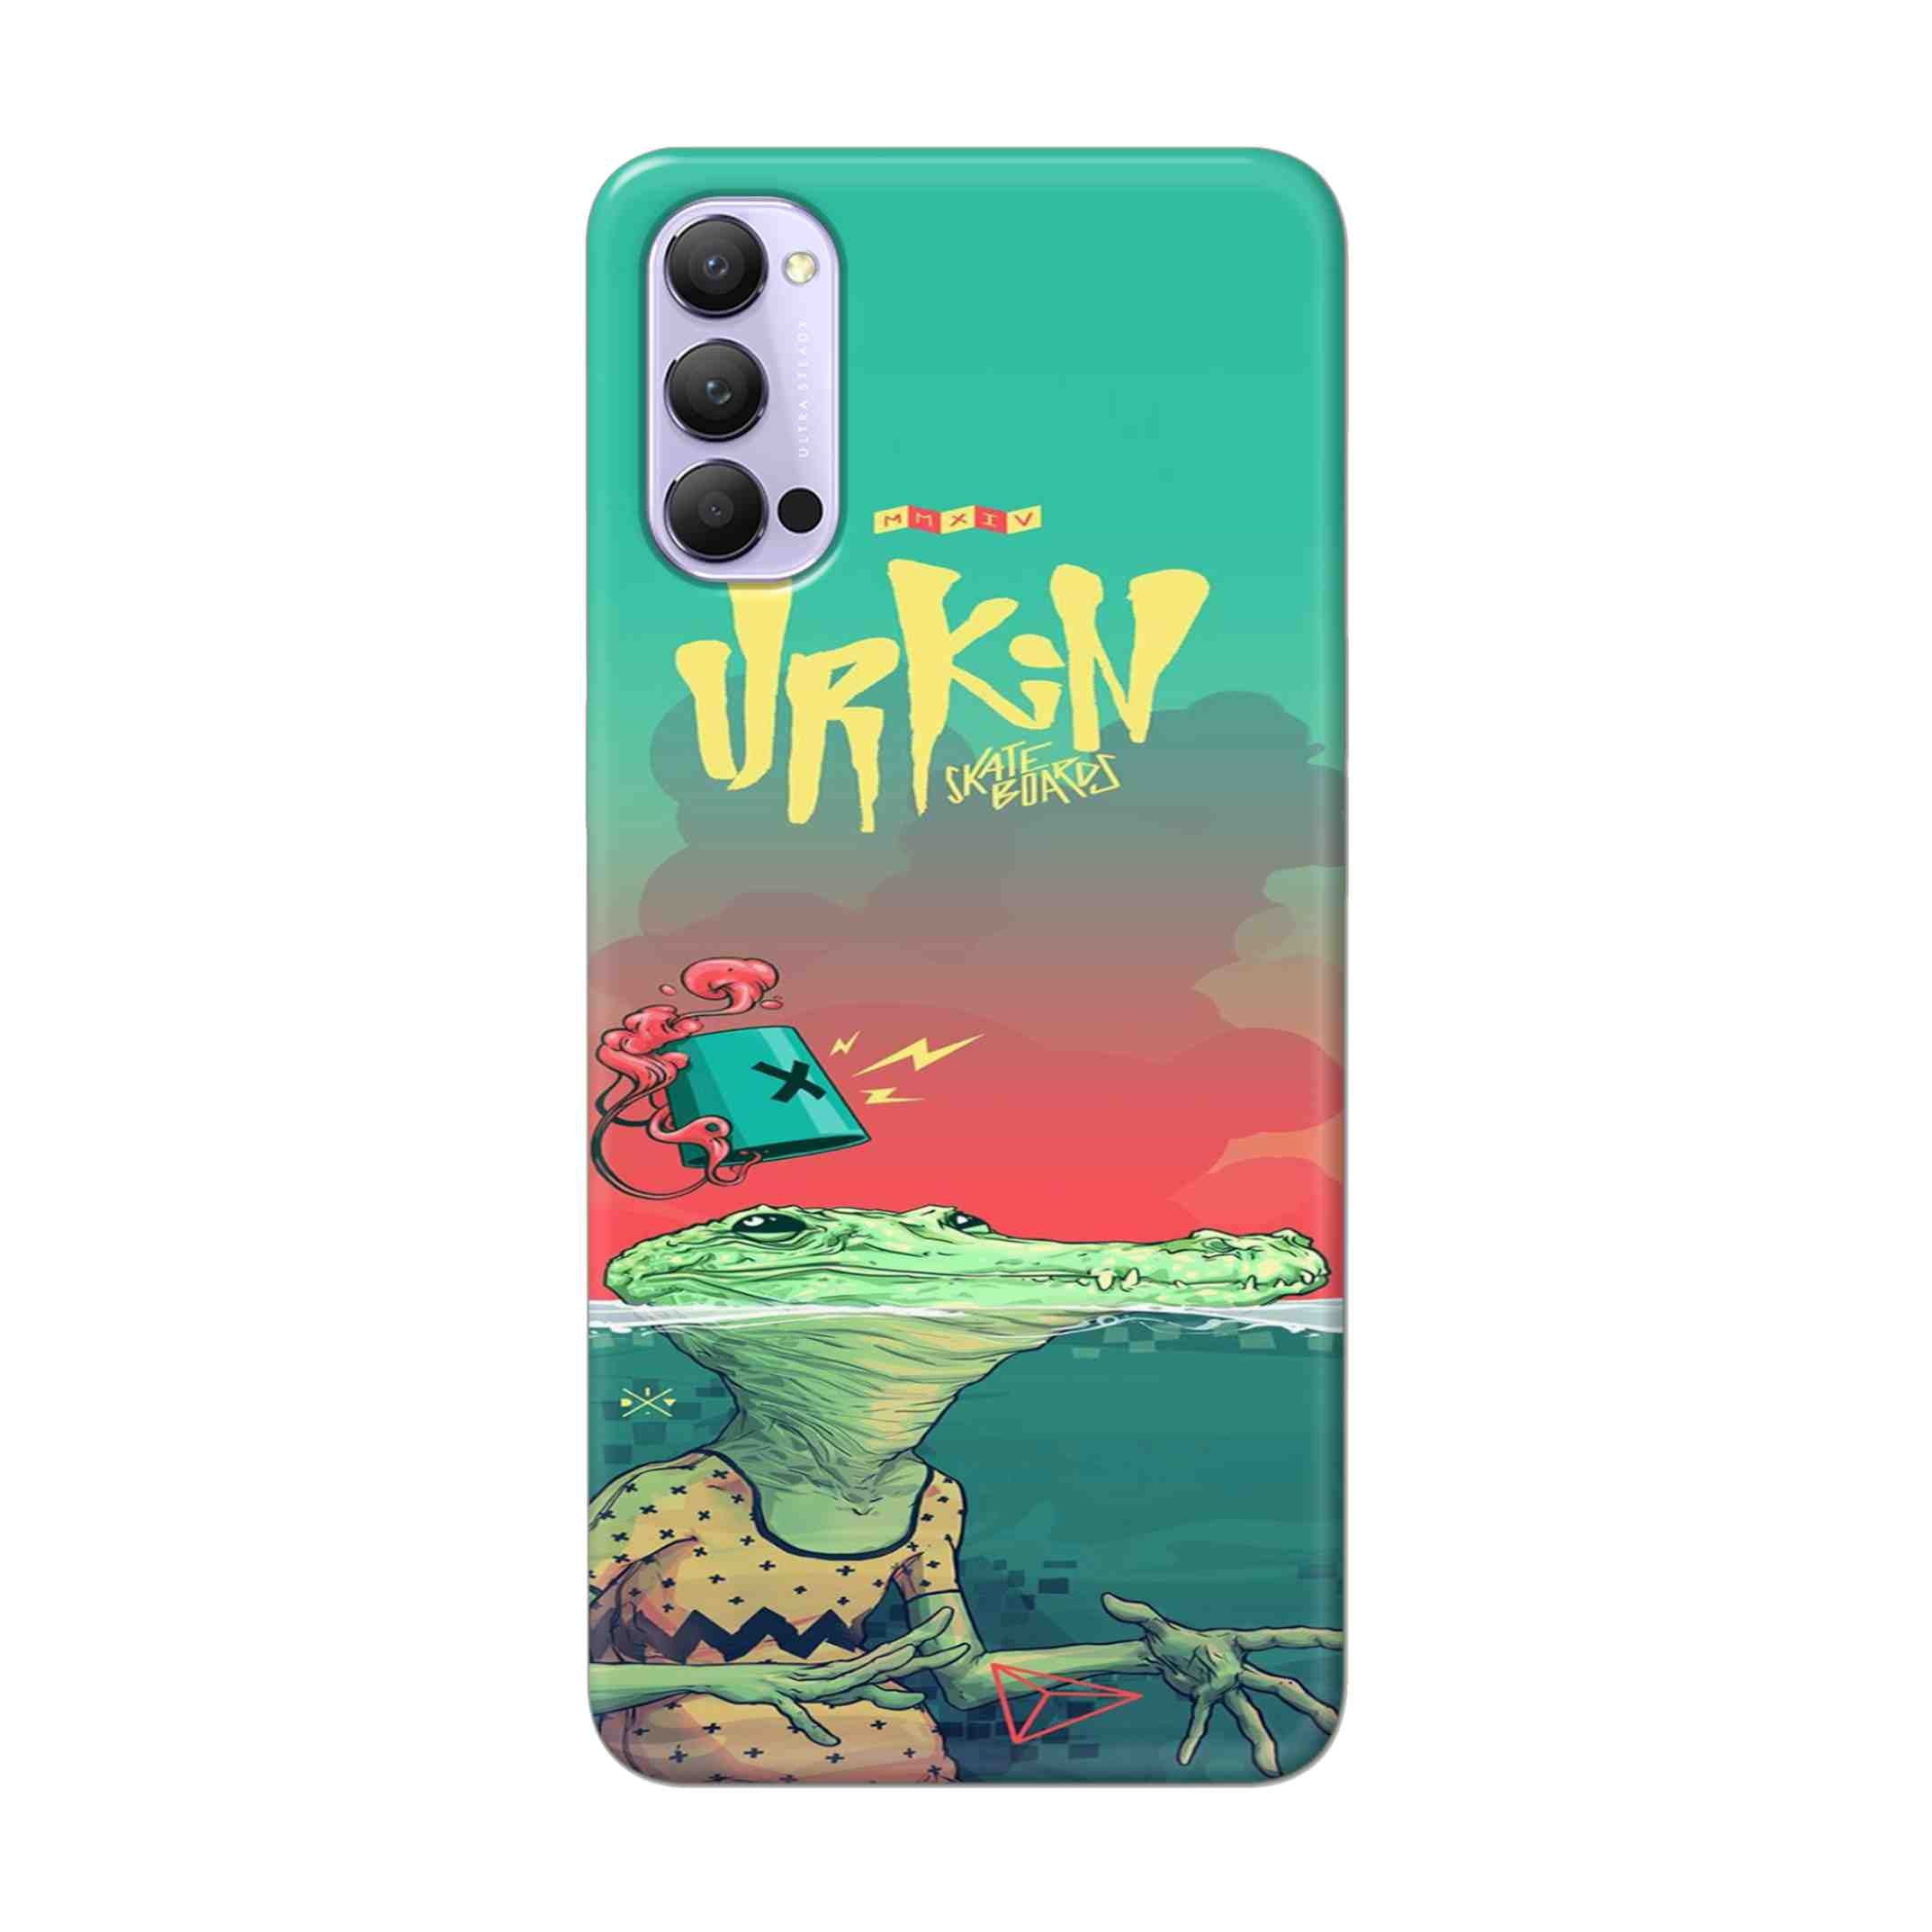 Buy Urkin Hard Back Mobile Phone Case Cover For Oppo Reno 4 Pro Online